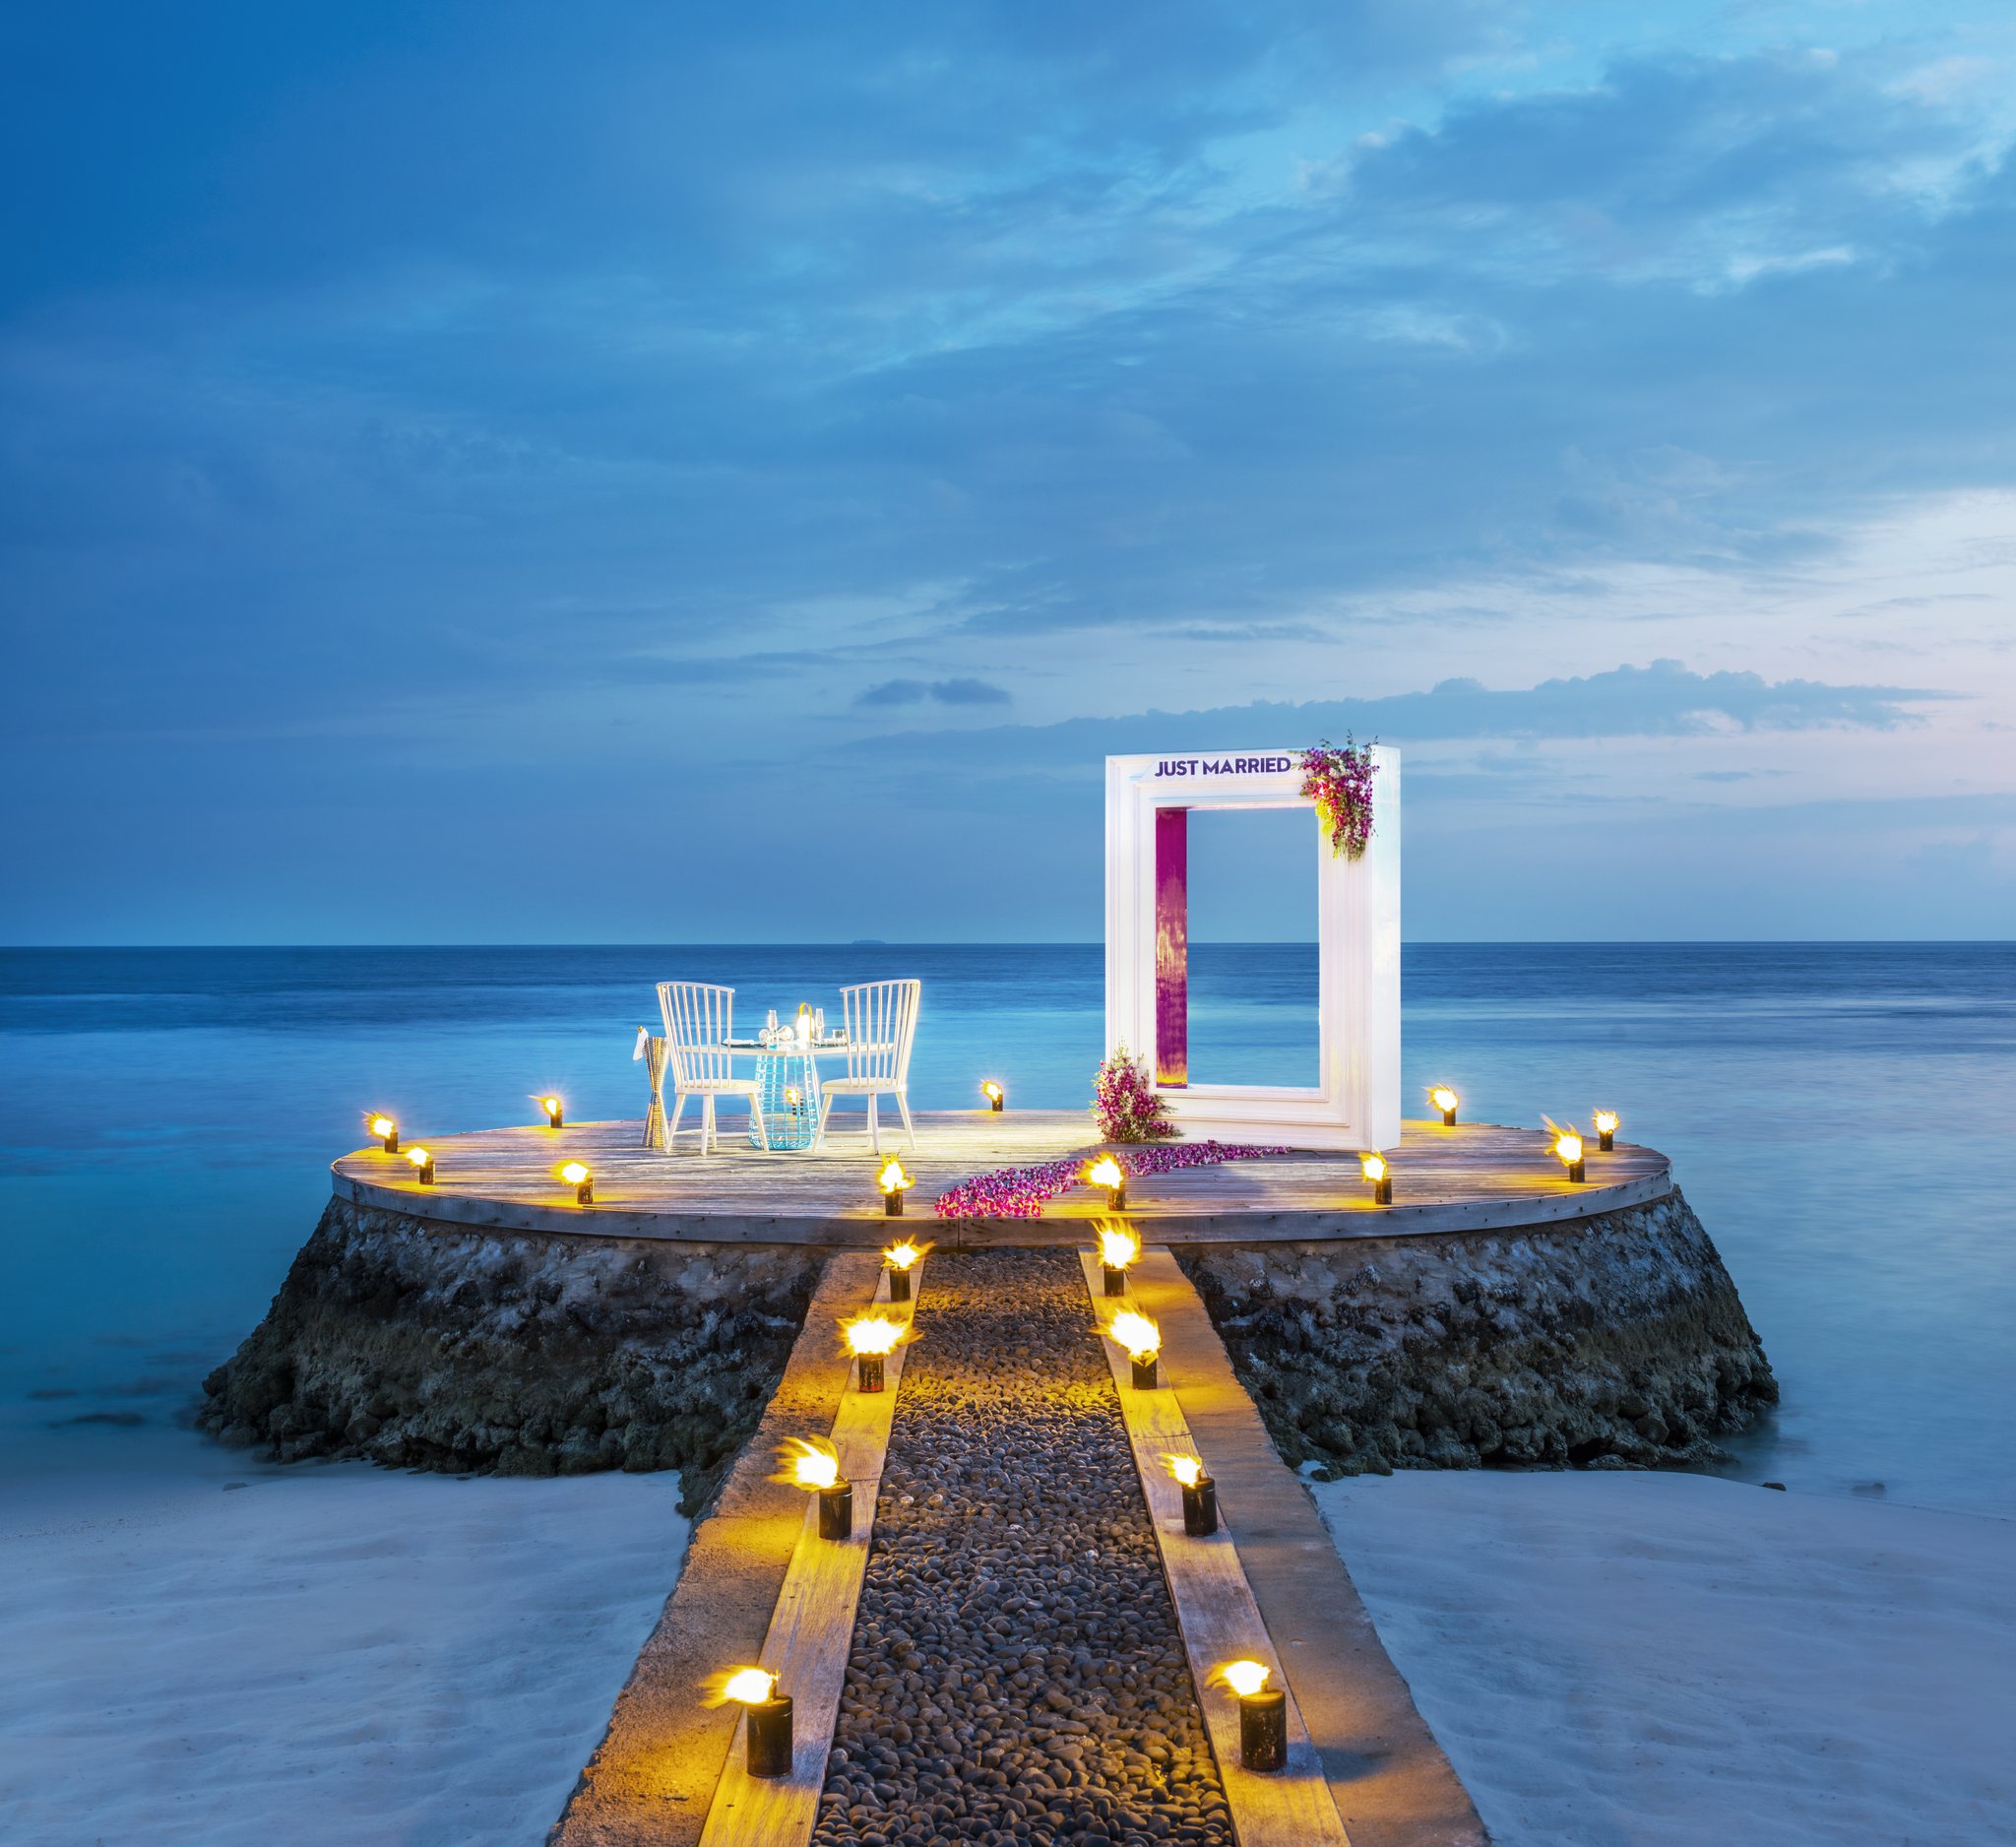 Dream wedding destination, the Maldives